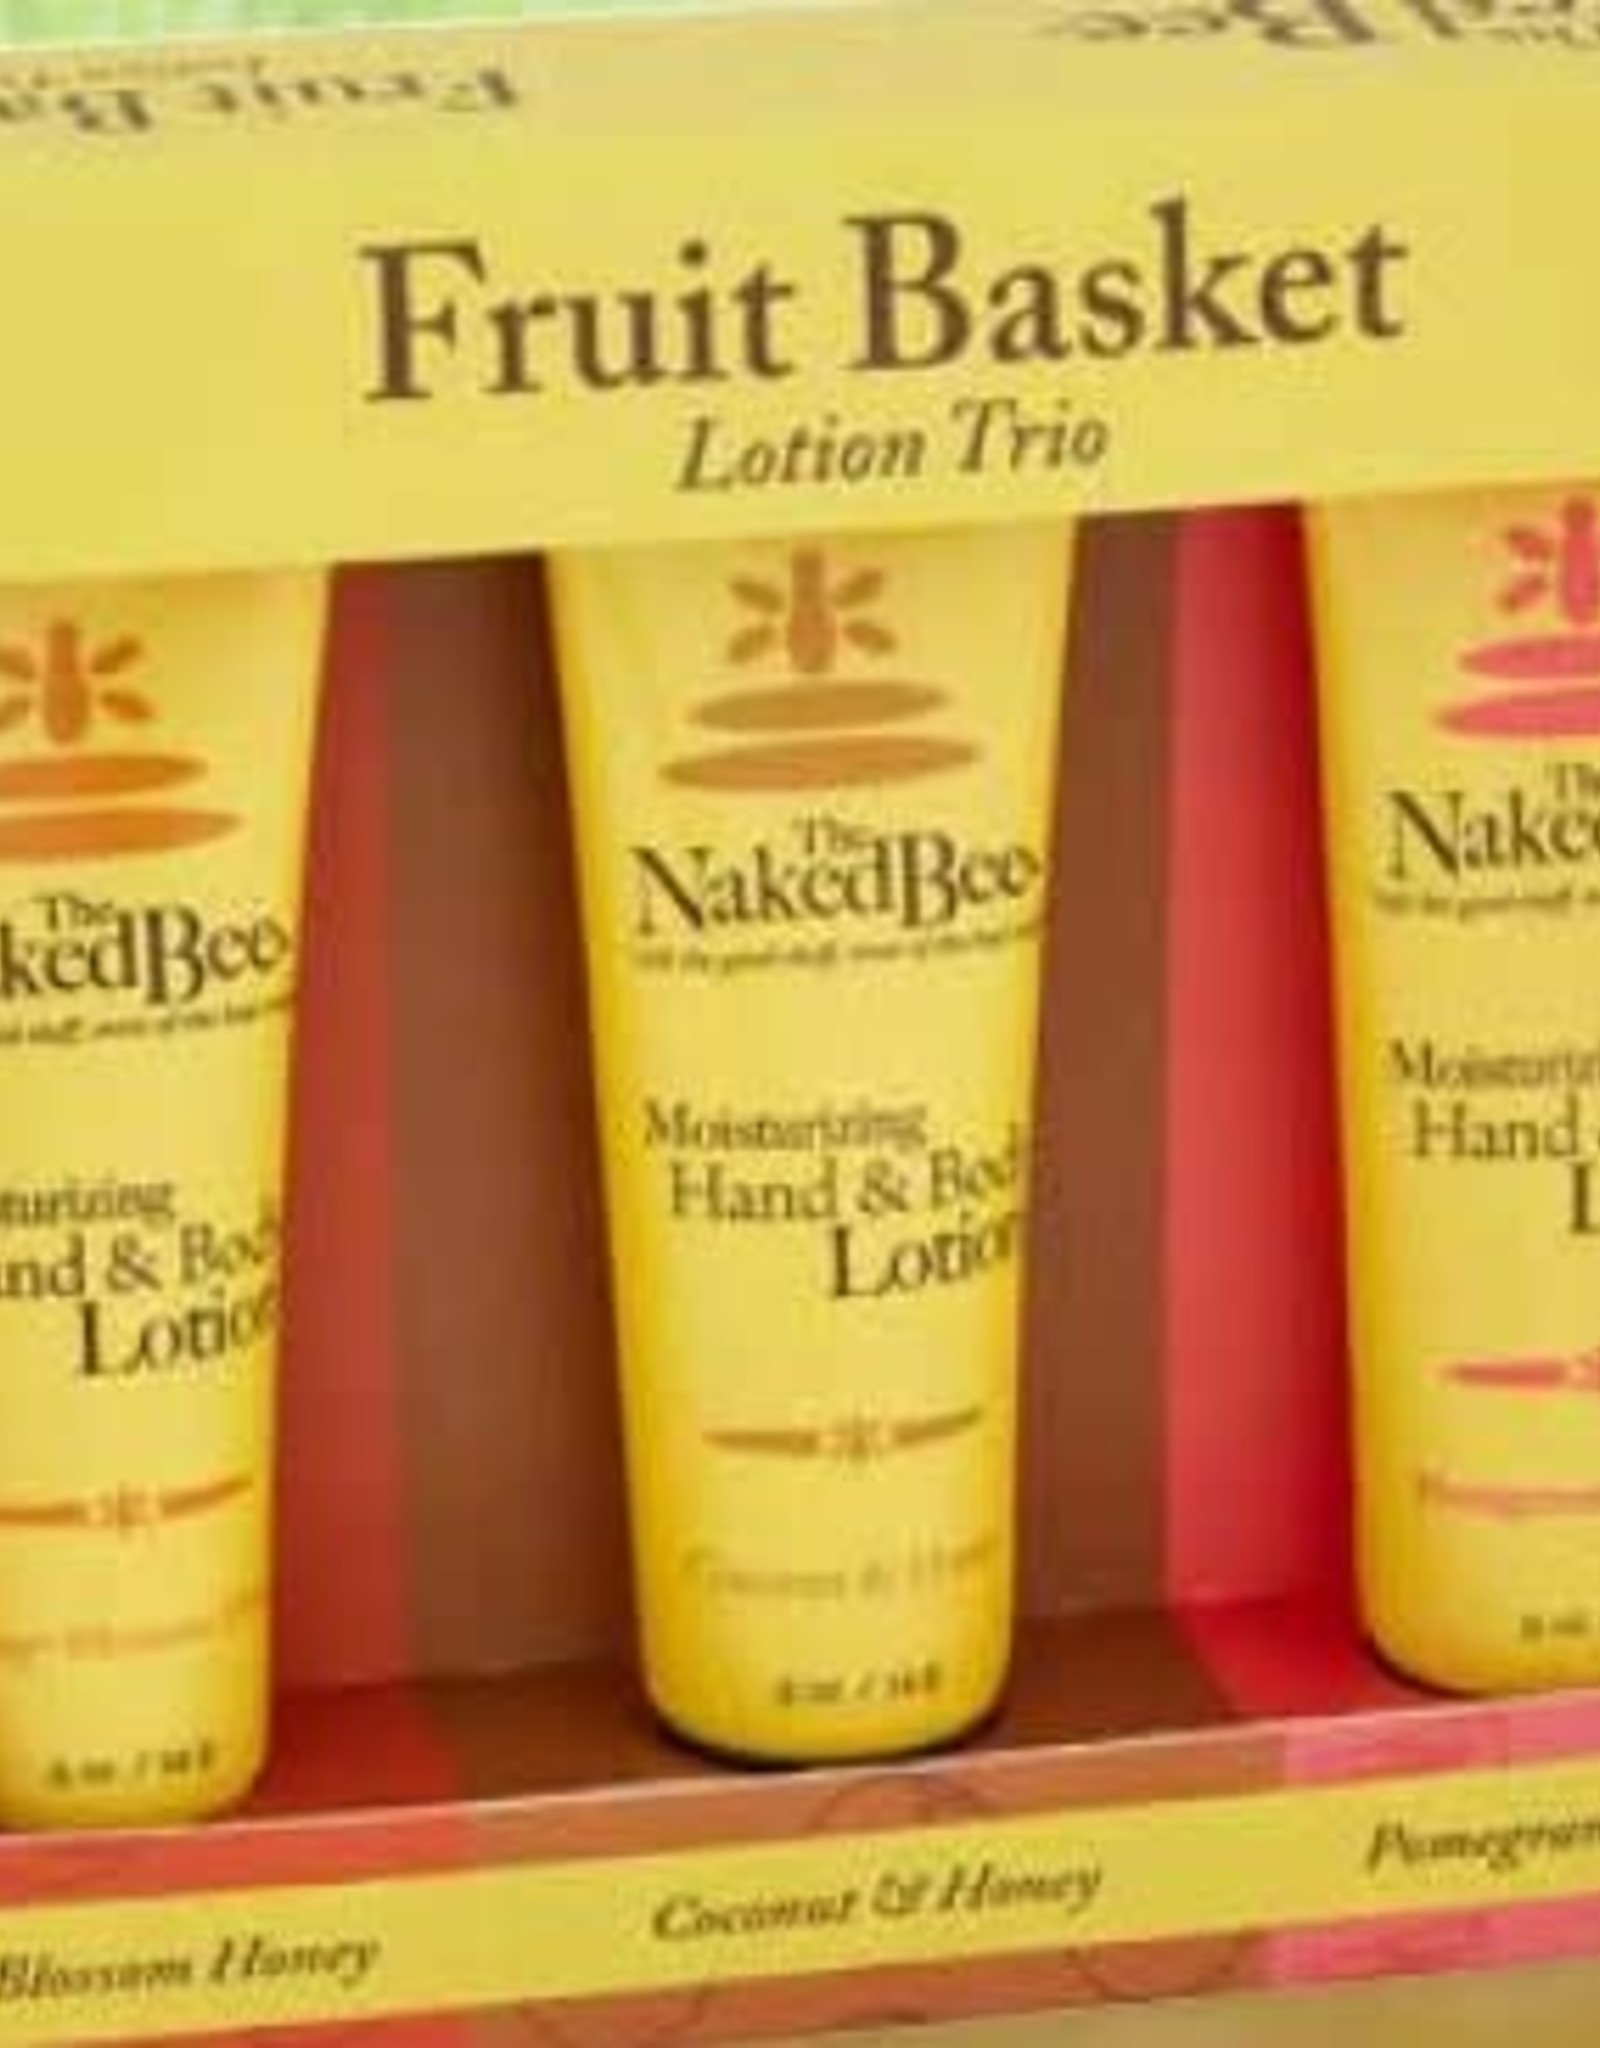 Naked Bee Fruit Basket Lotion Trio